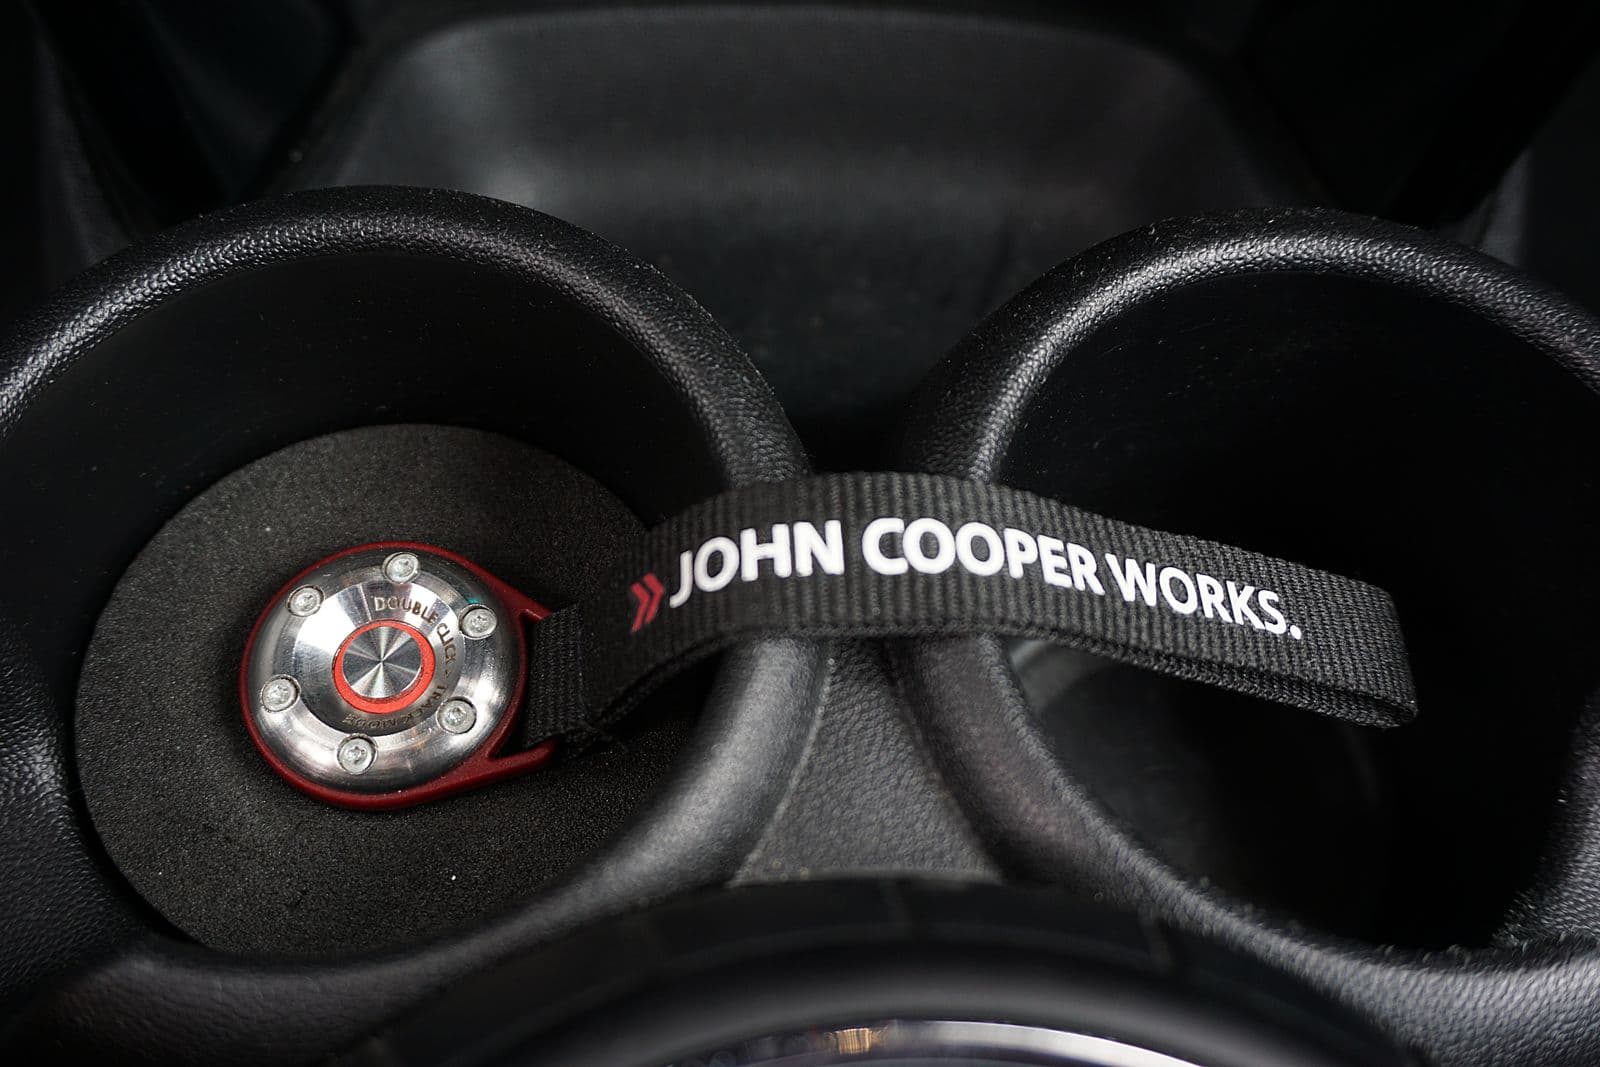 Mini John Cooper Works 231ch Exclusive Design BVAS Occasion 79 abcautofrance (abc auto france) 25